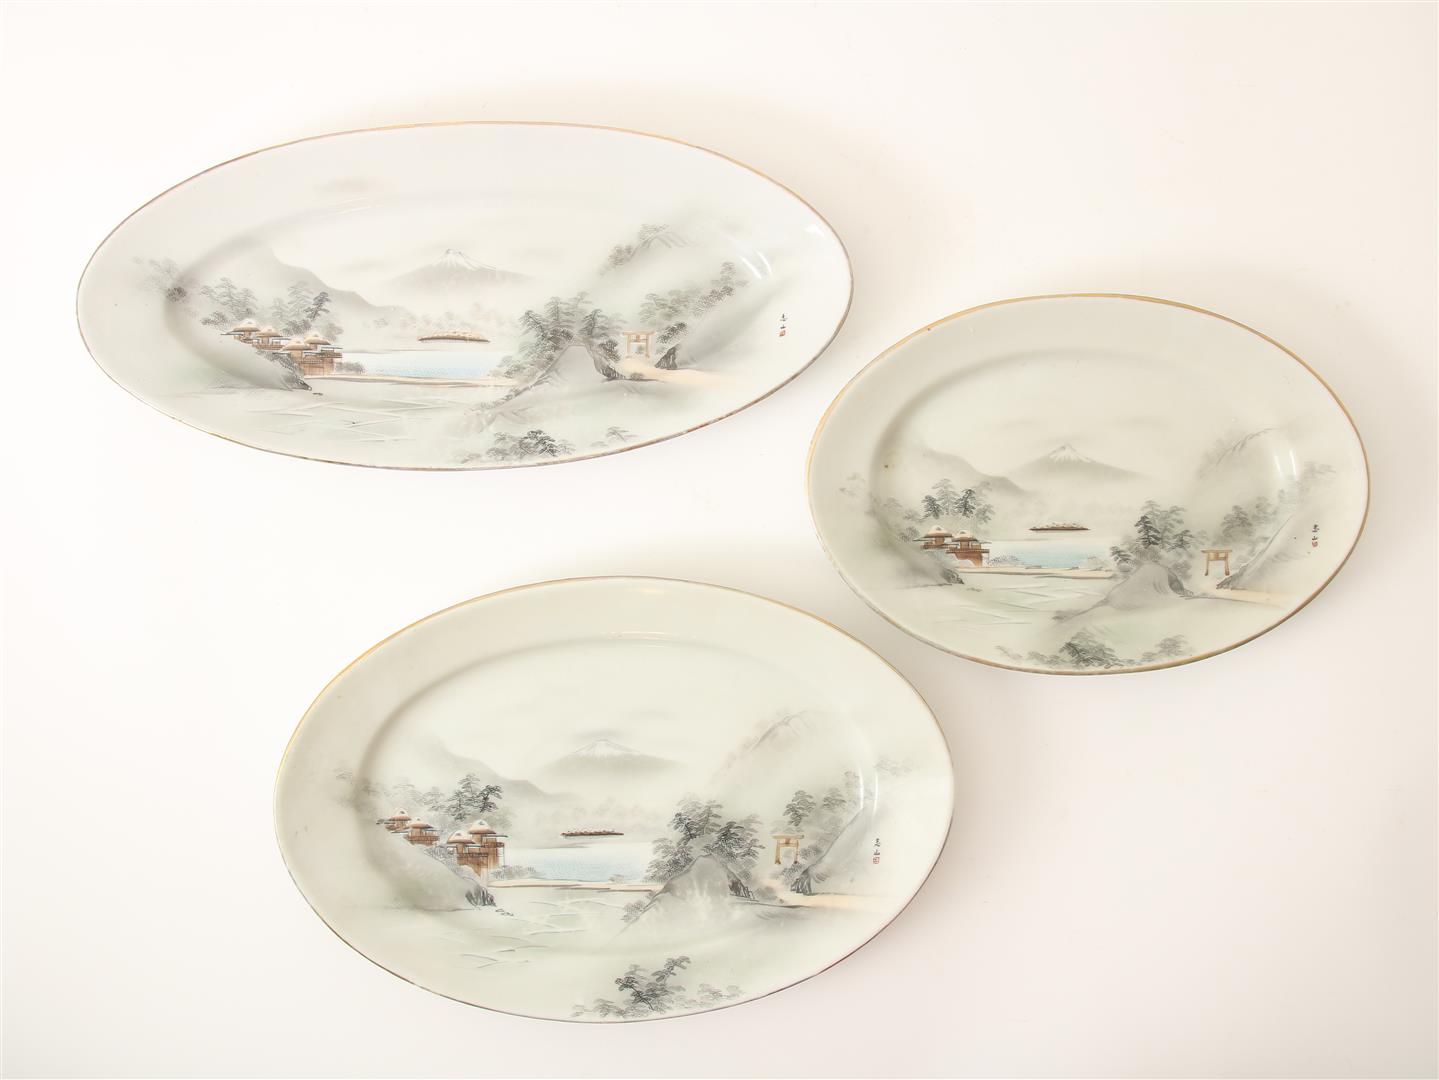 Series of 3 porcelain Kutani serving bowls with Mount Fuji decor, signed bottom right, Japan,